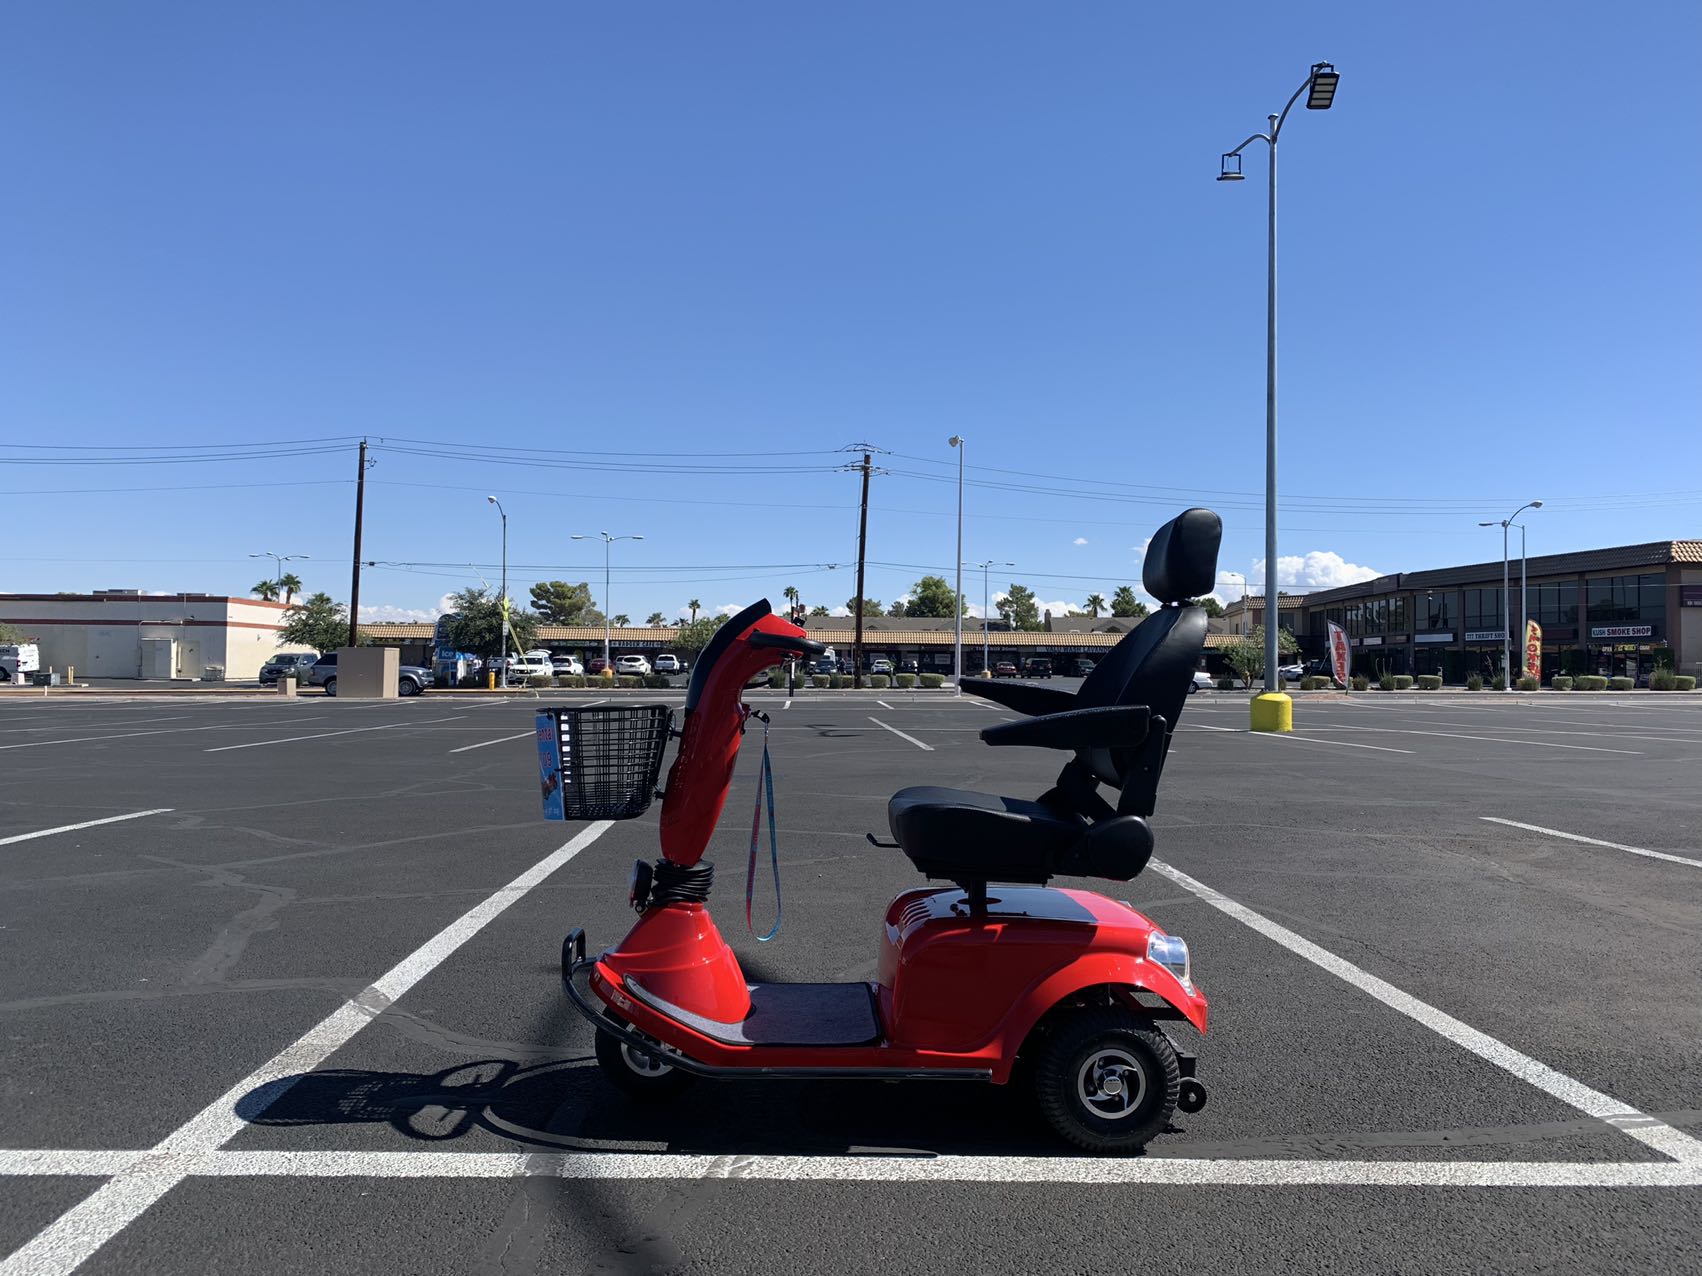 Misbrug Orkan Anonym 3 Wheels Mobility Scooter Rental - Rapid Rental